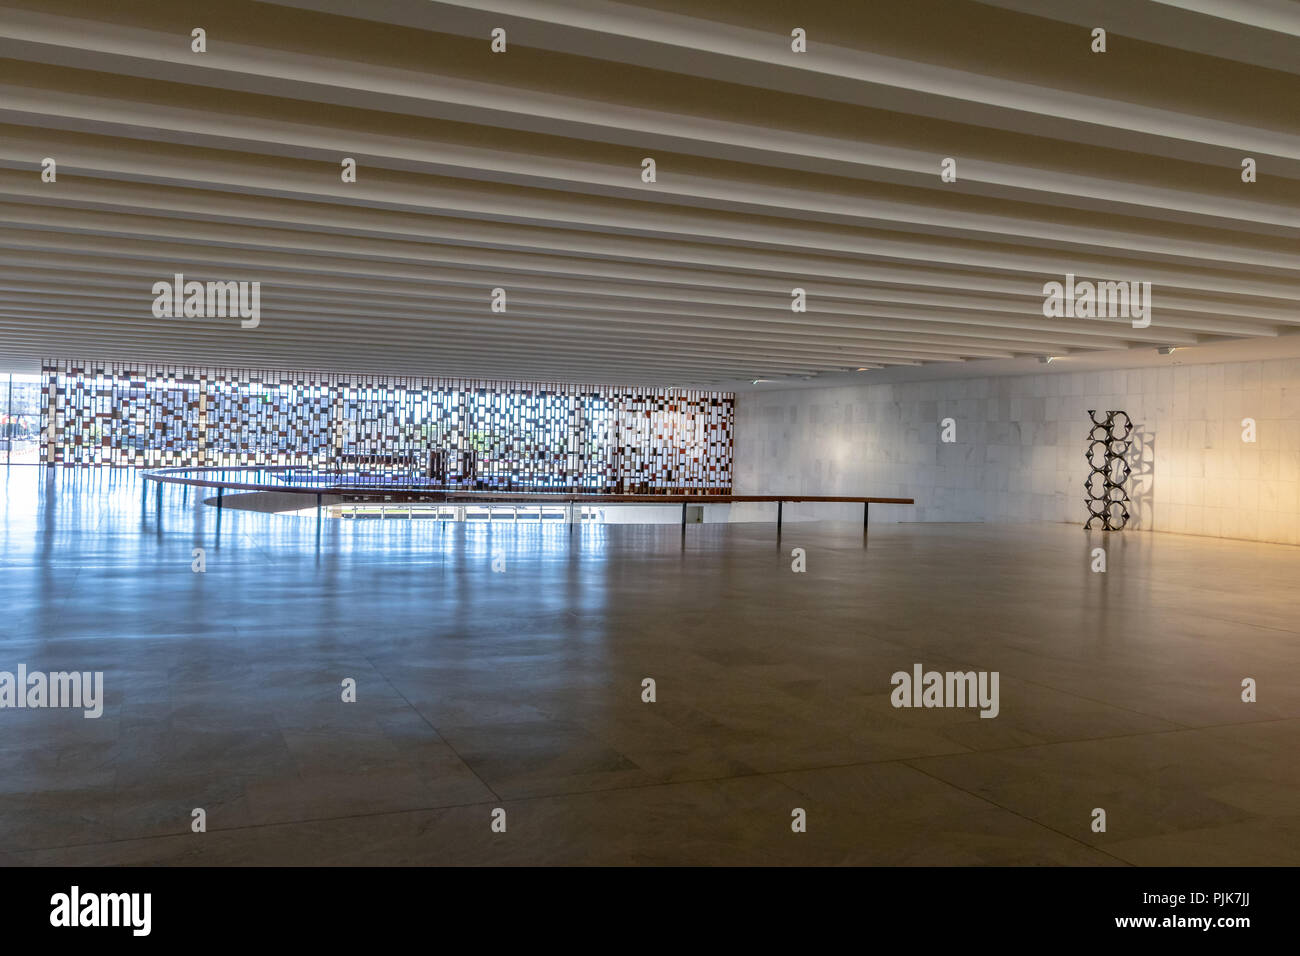 Mezzanine at Itamaraty Palace interior - Brasilia, Distrito Federal, Brazil Stock Photo